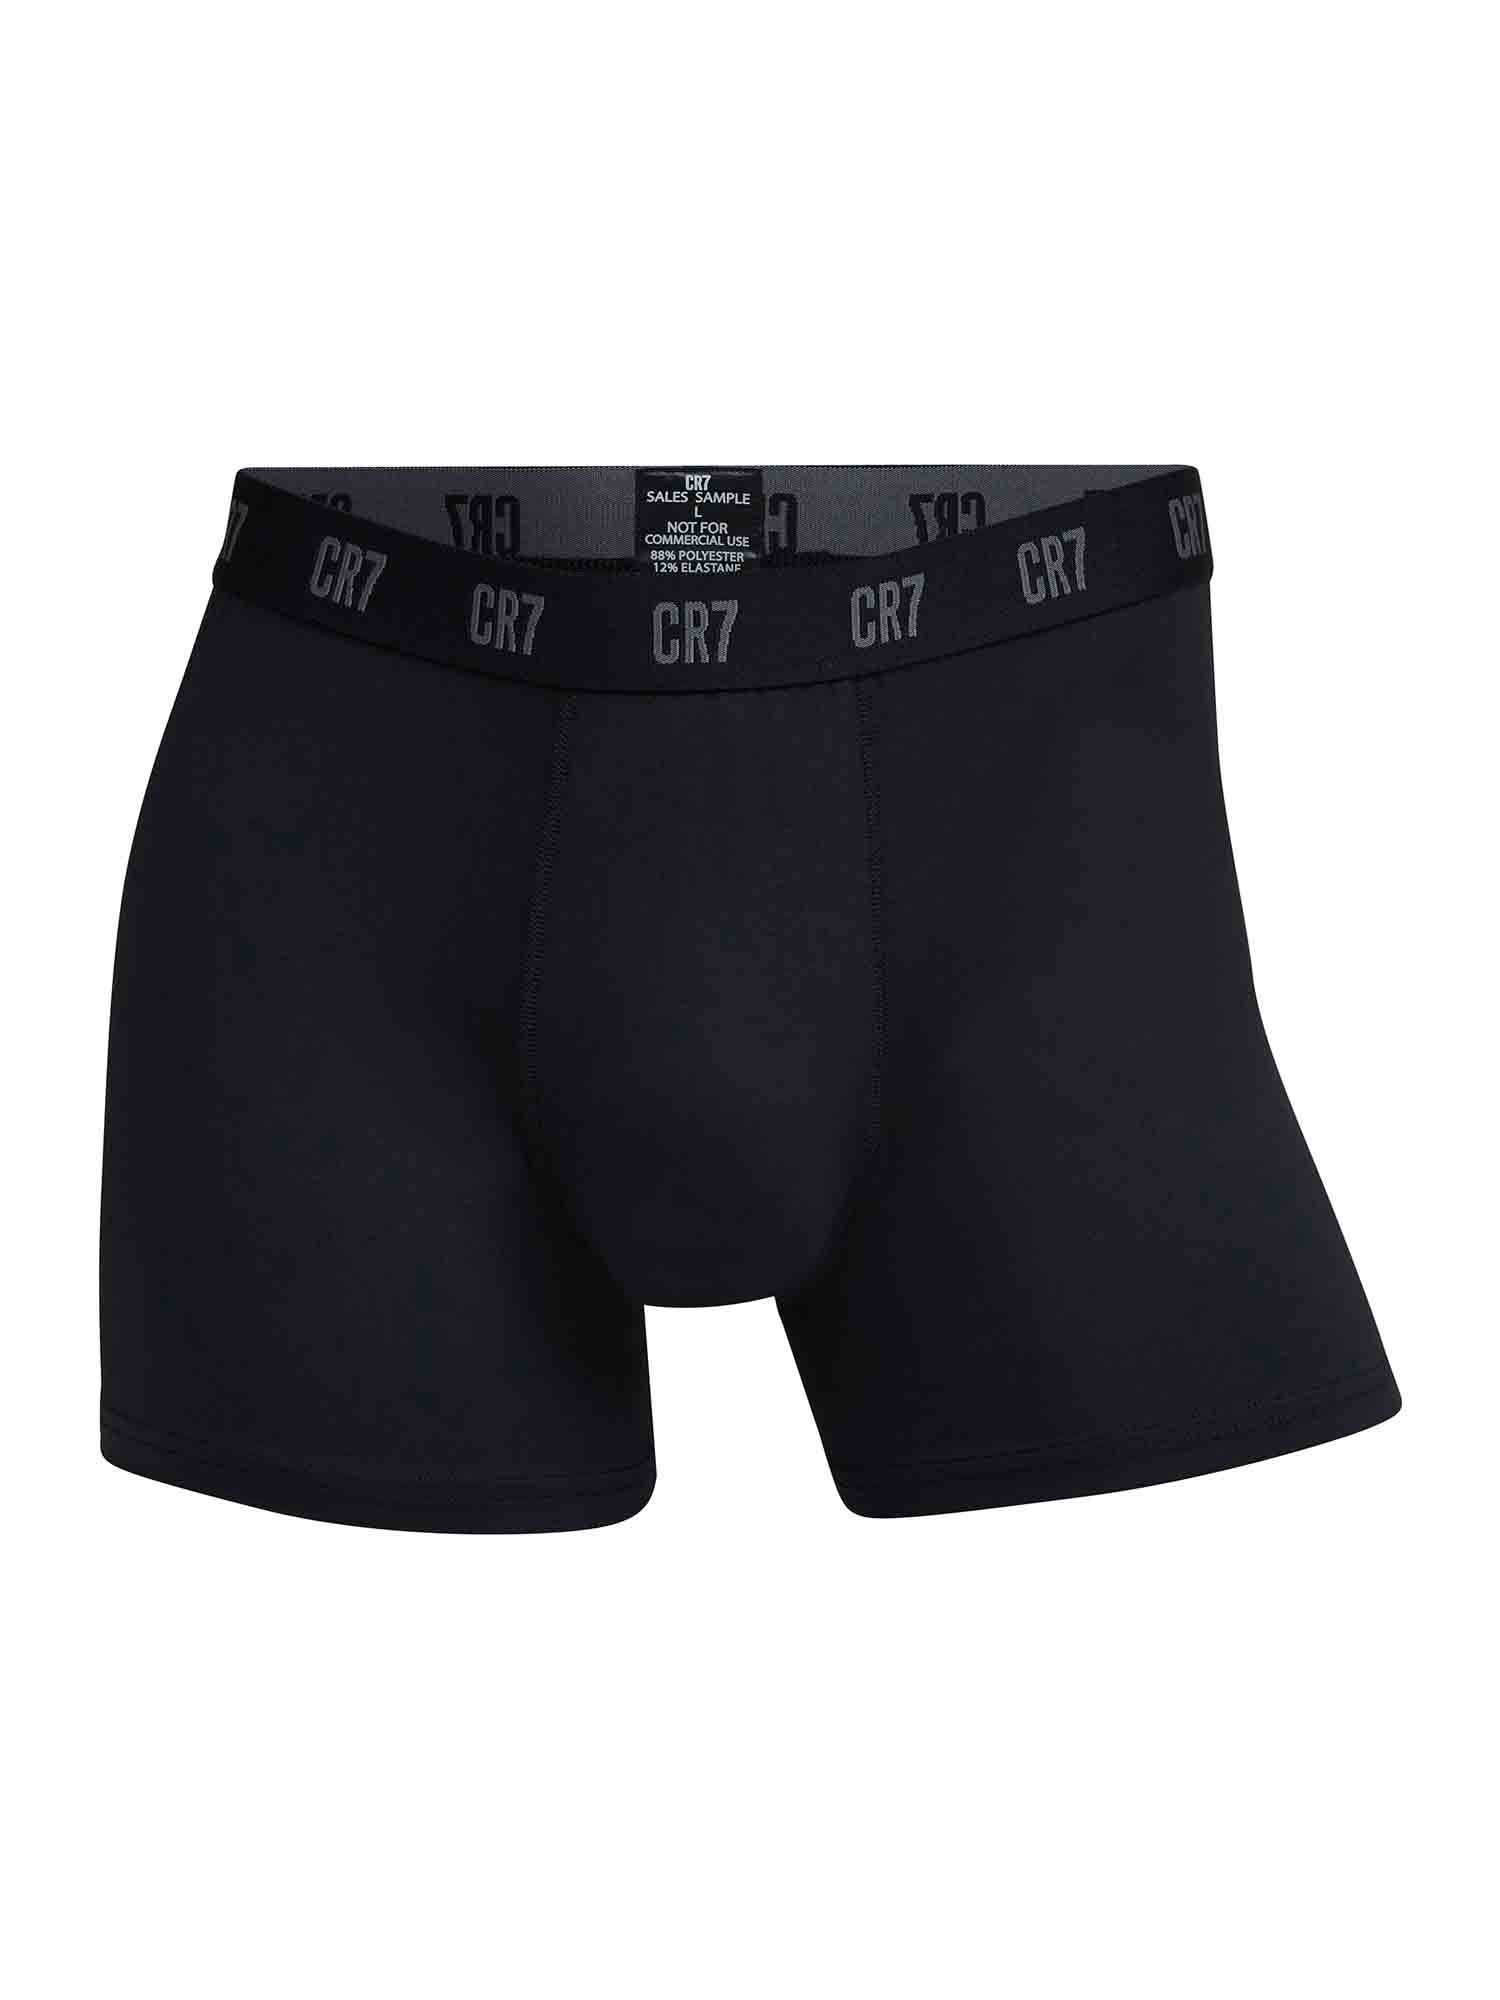 Retro CR7 Herren 18 (3-St) Boxershorts Retro Männer Multipack Pants Pants Trunks Multi